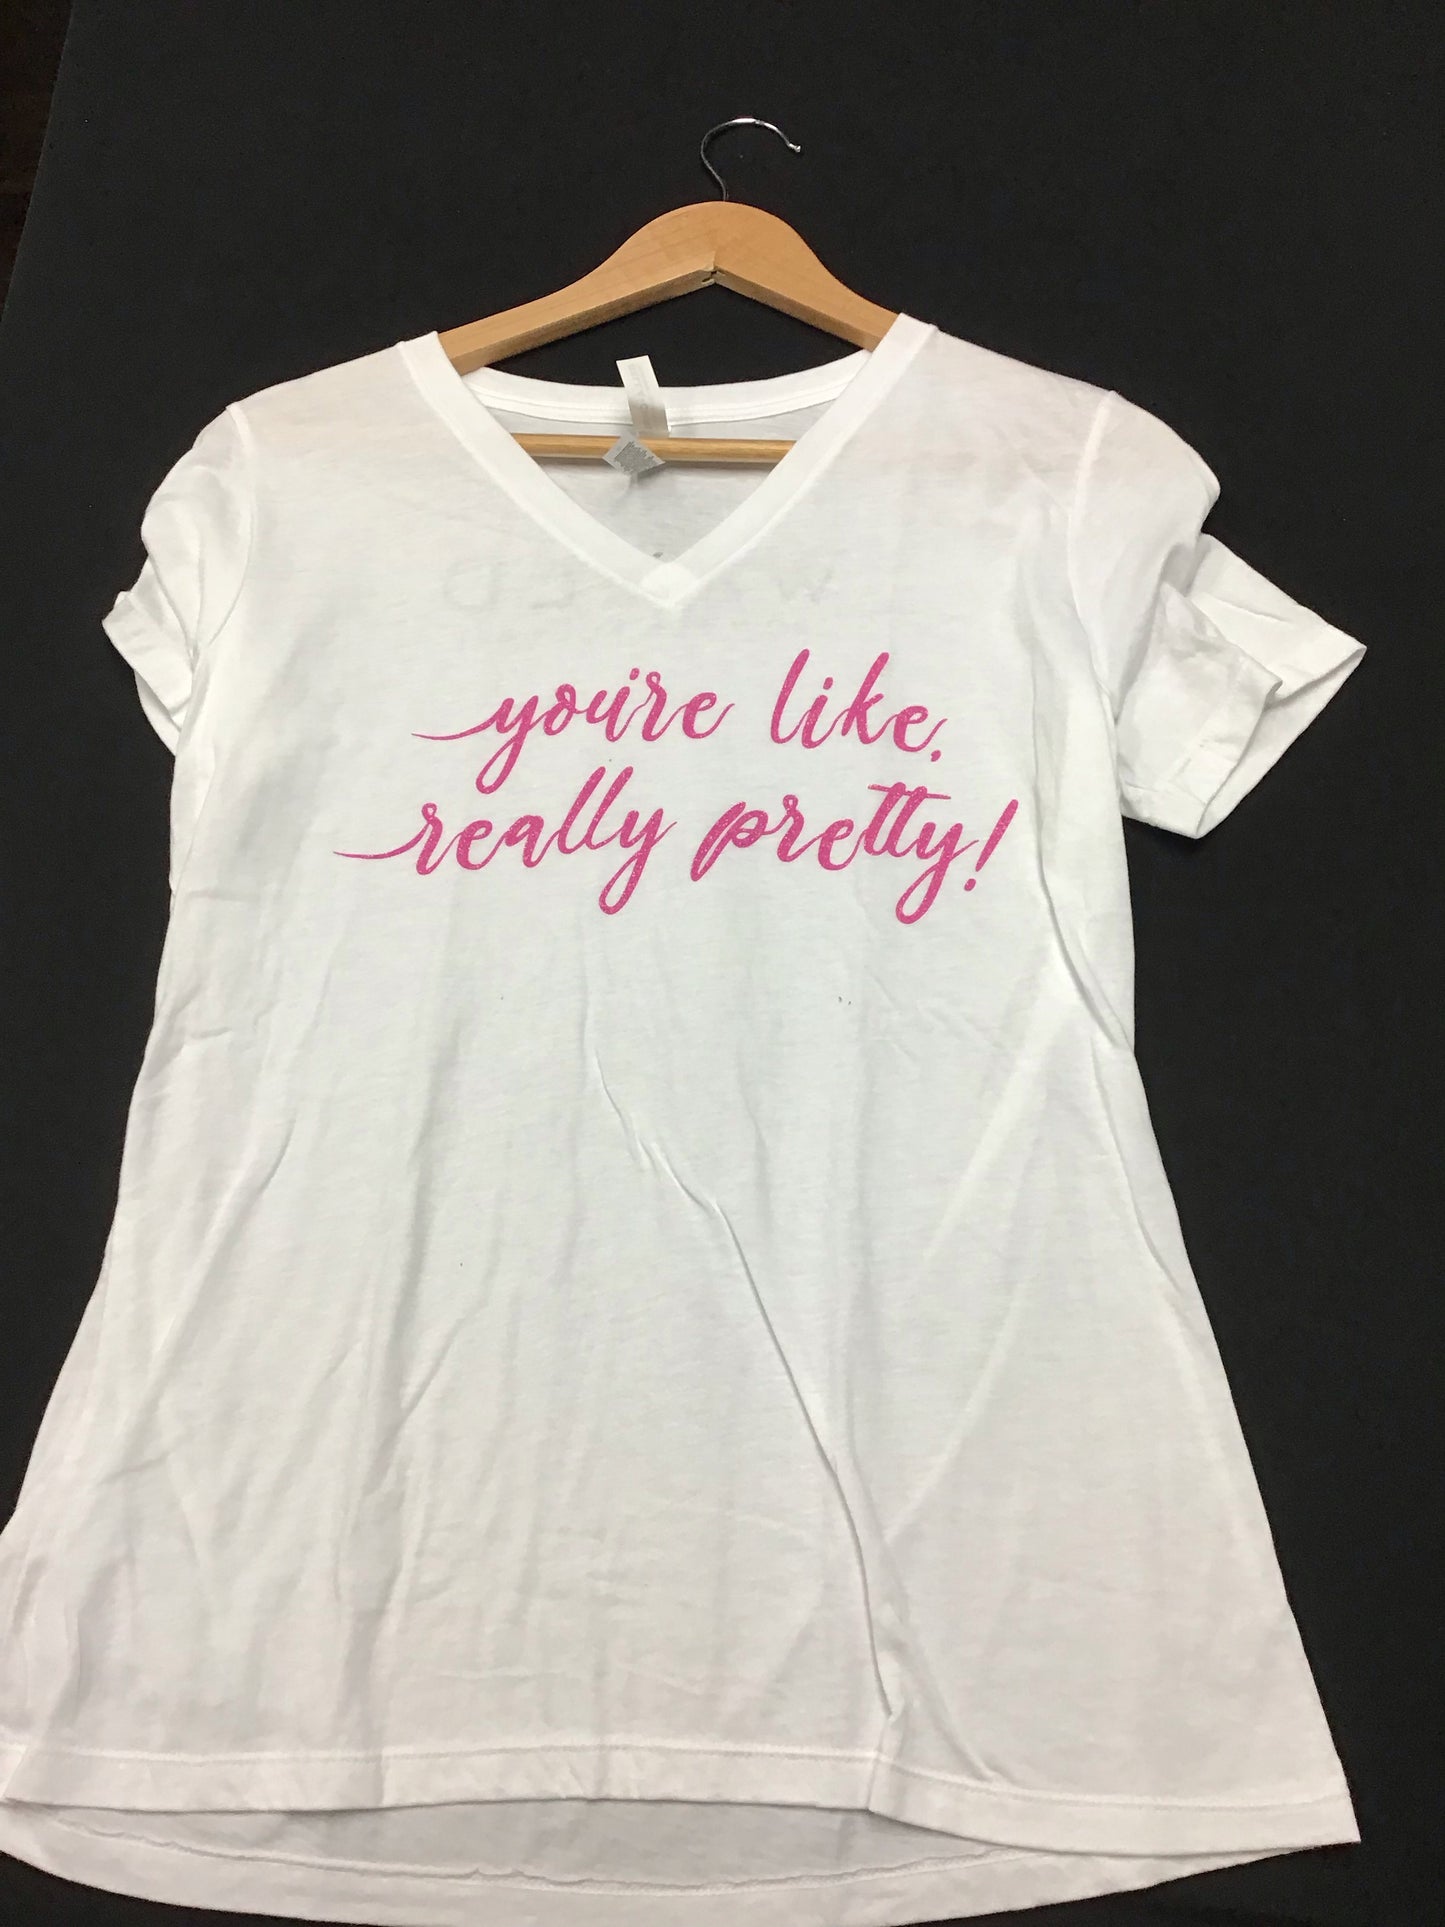 You’re like really pretty T-shirt (White)